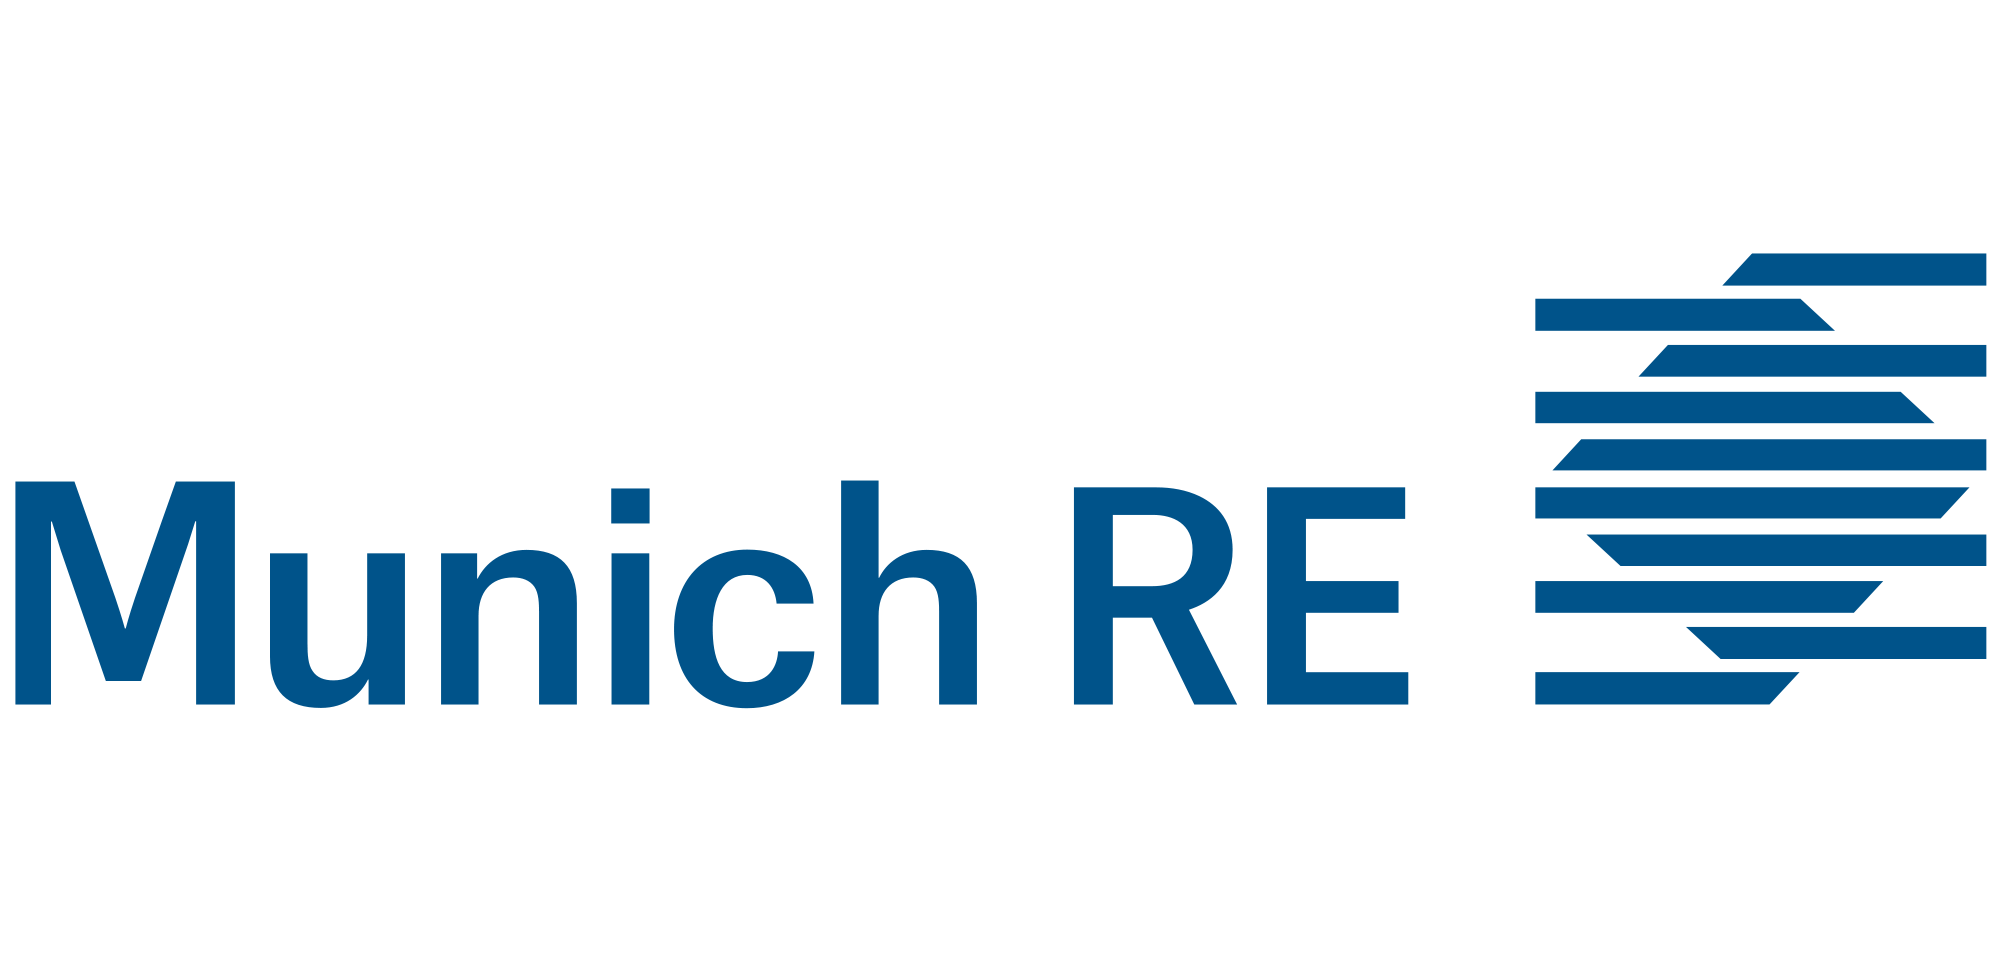 Munich Re Logo